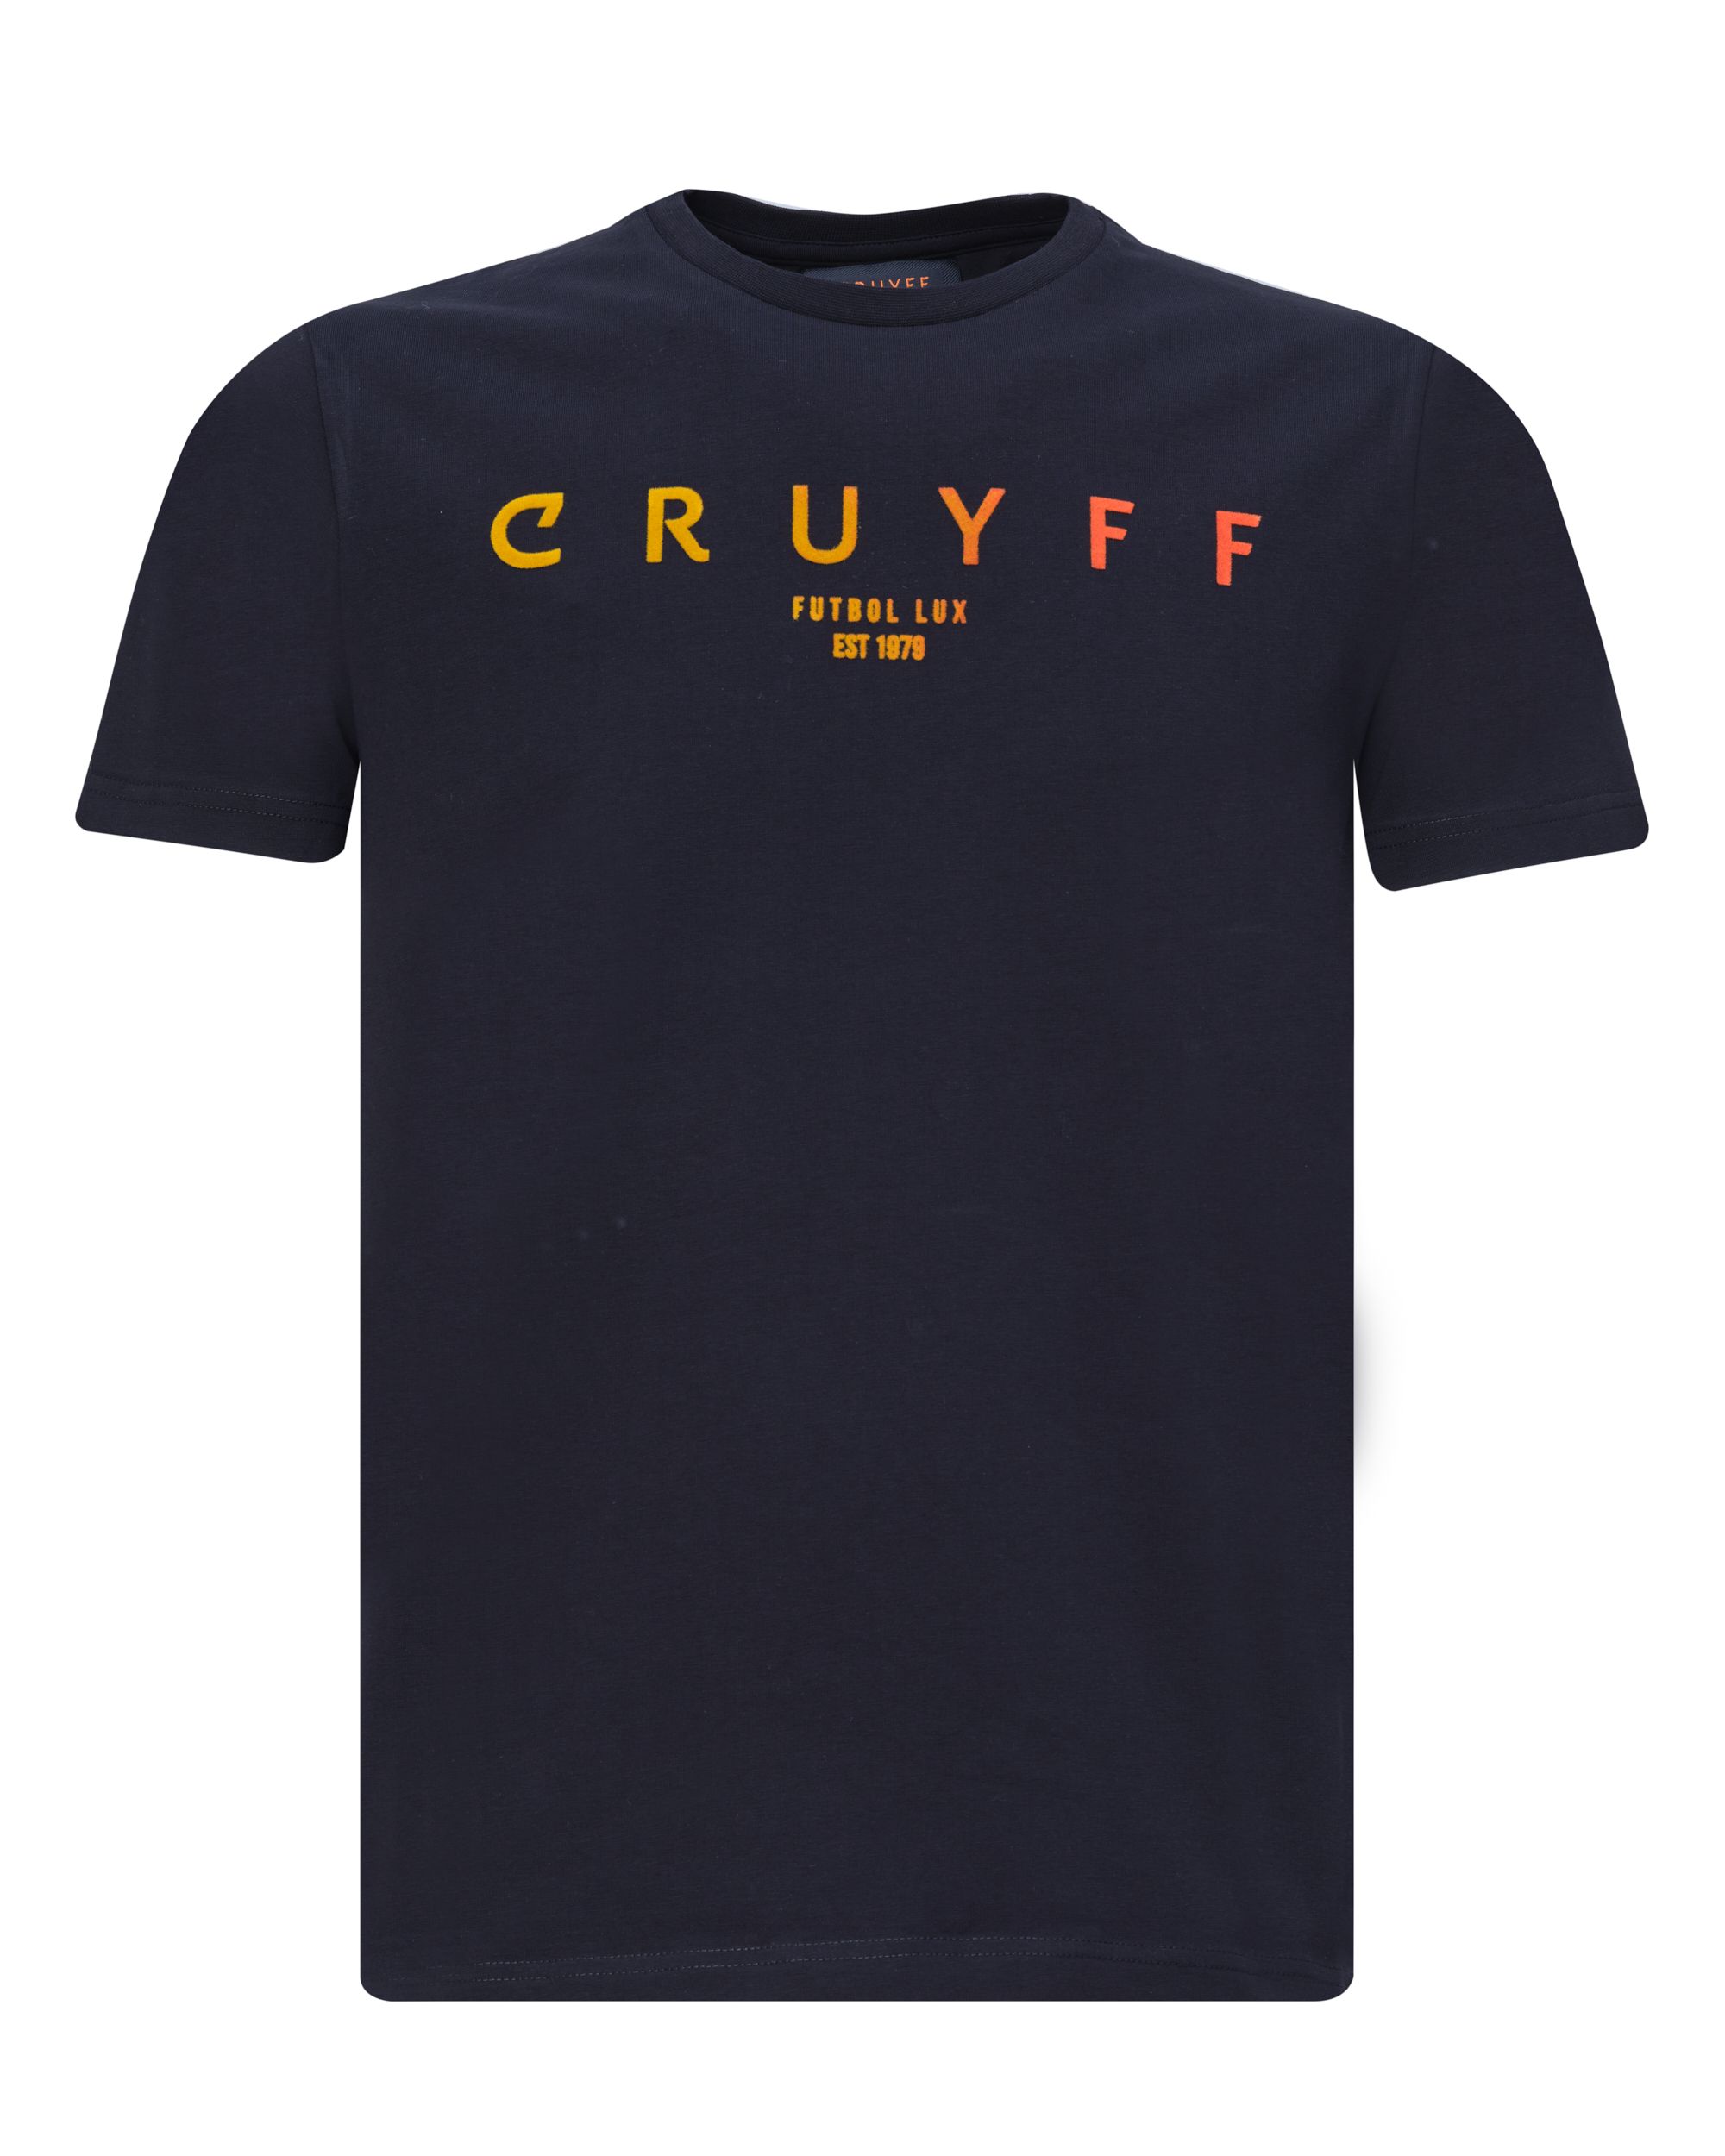 Cruyff Eder T-shirt KM Zwart 078797-001-L